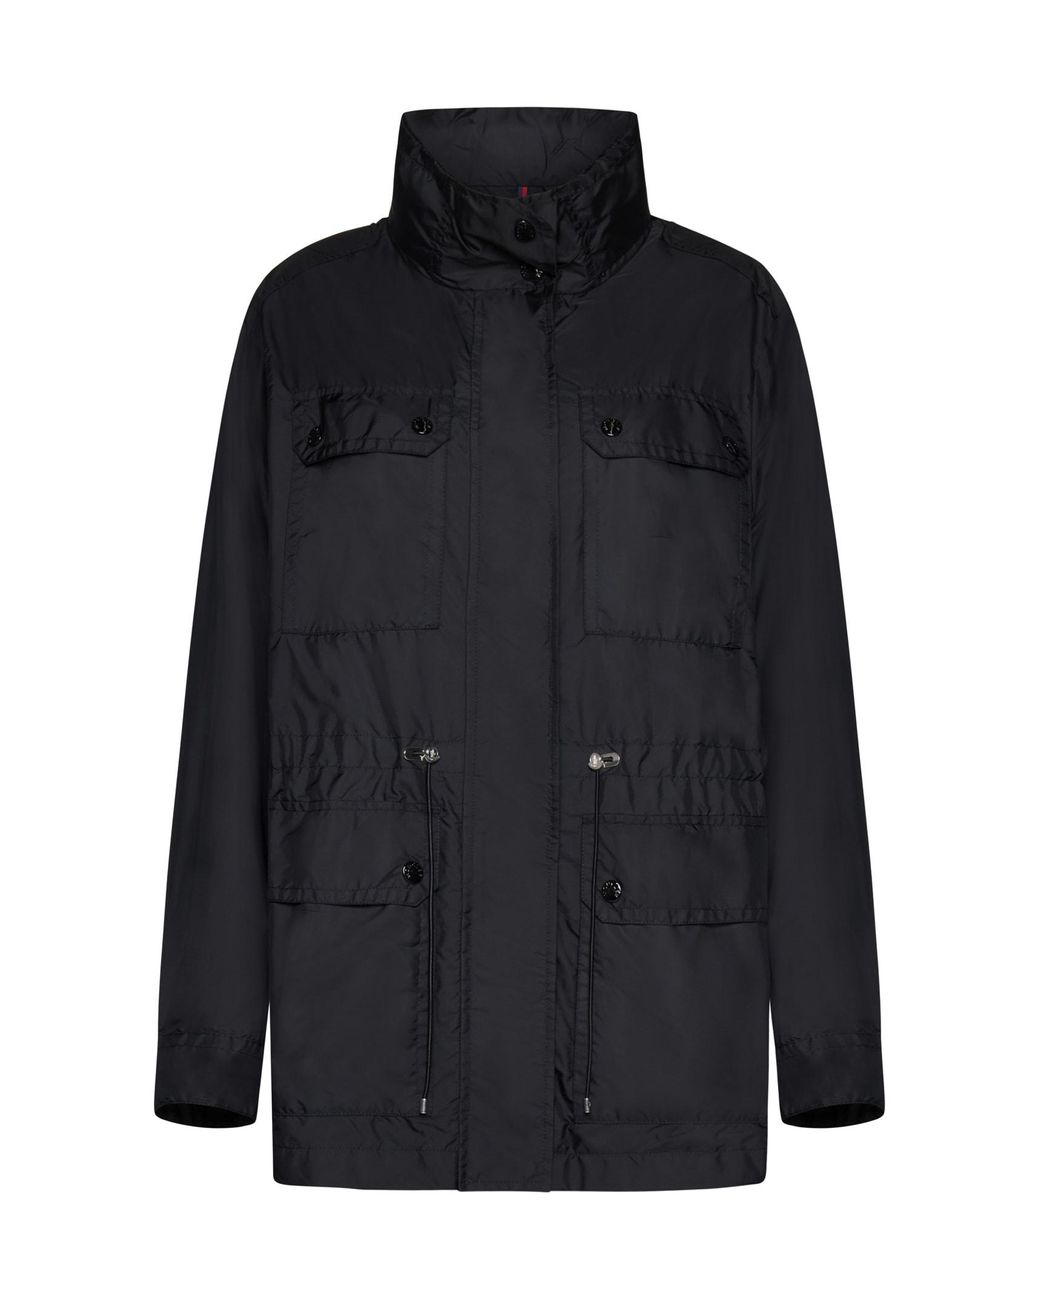 Moncler Agde Nylon Field Jacket in Black | Lyst